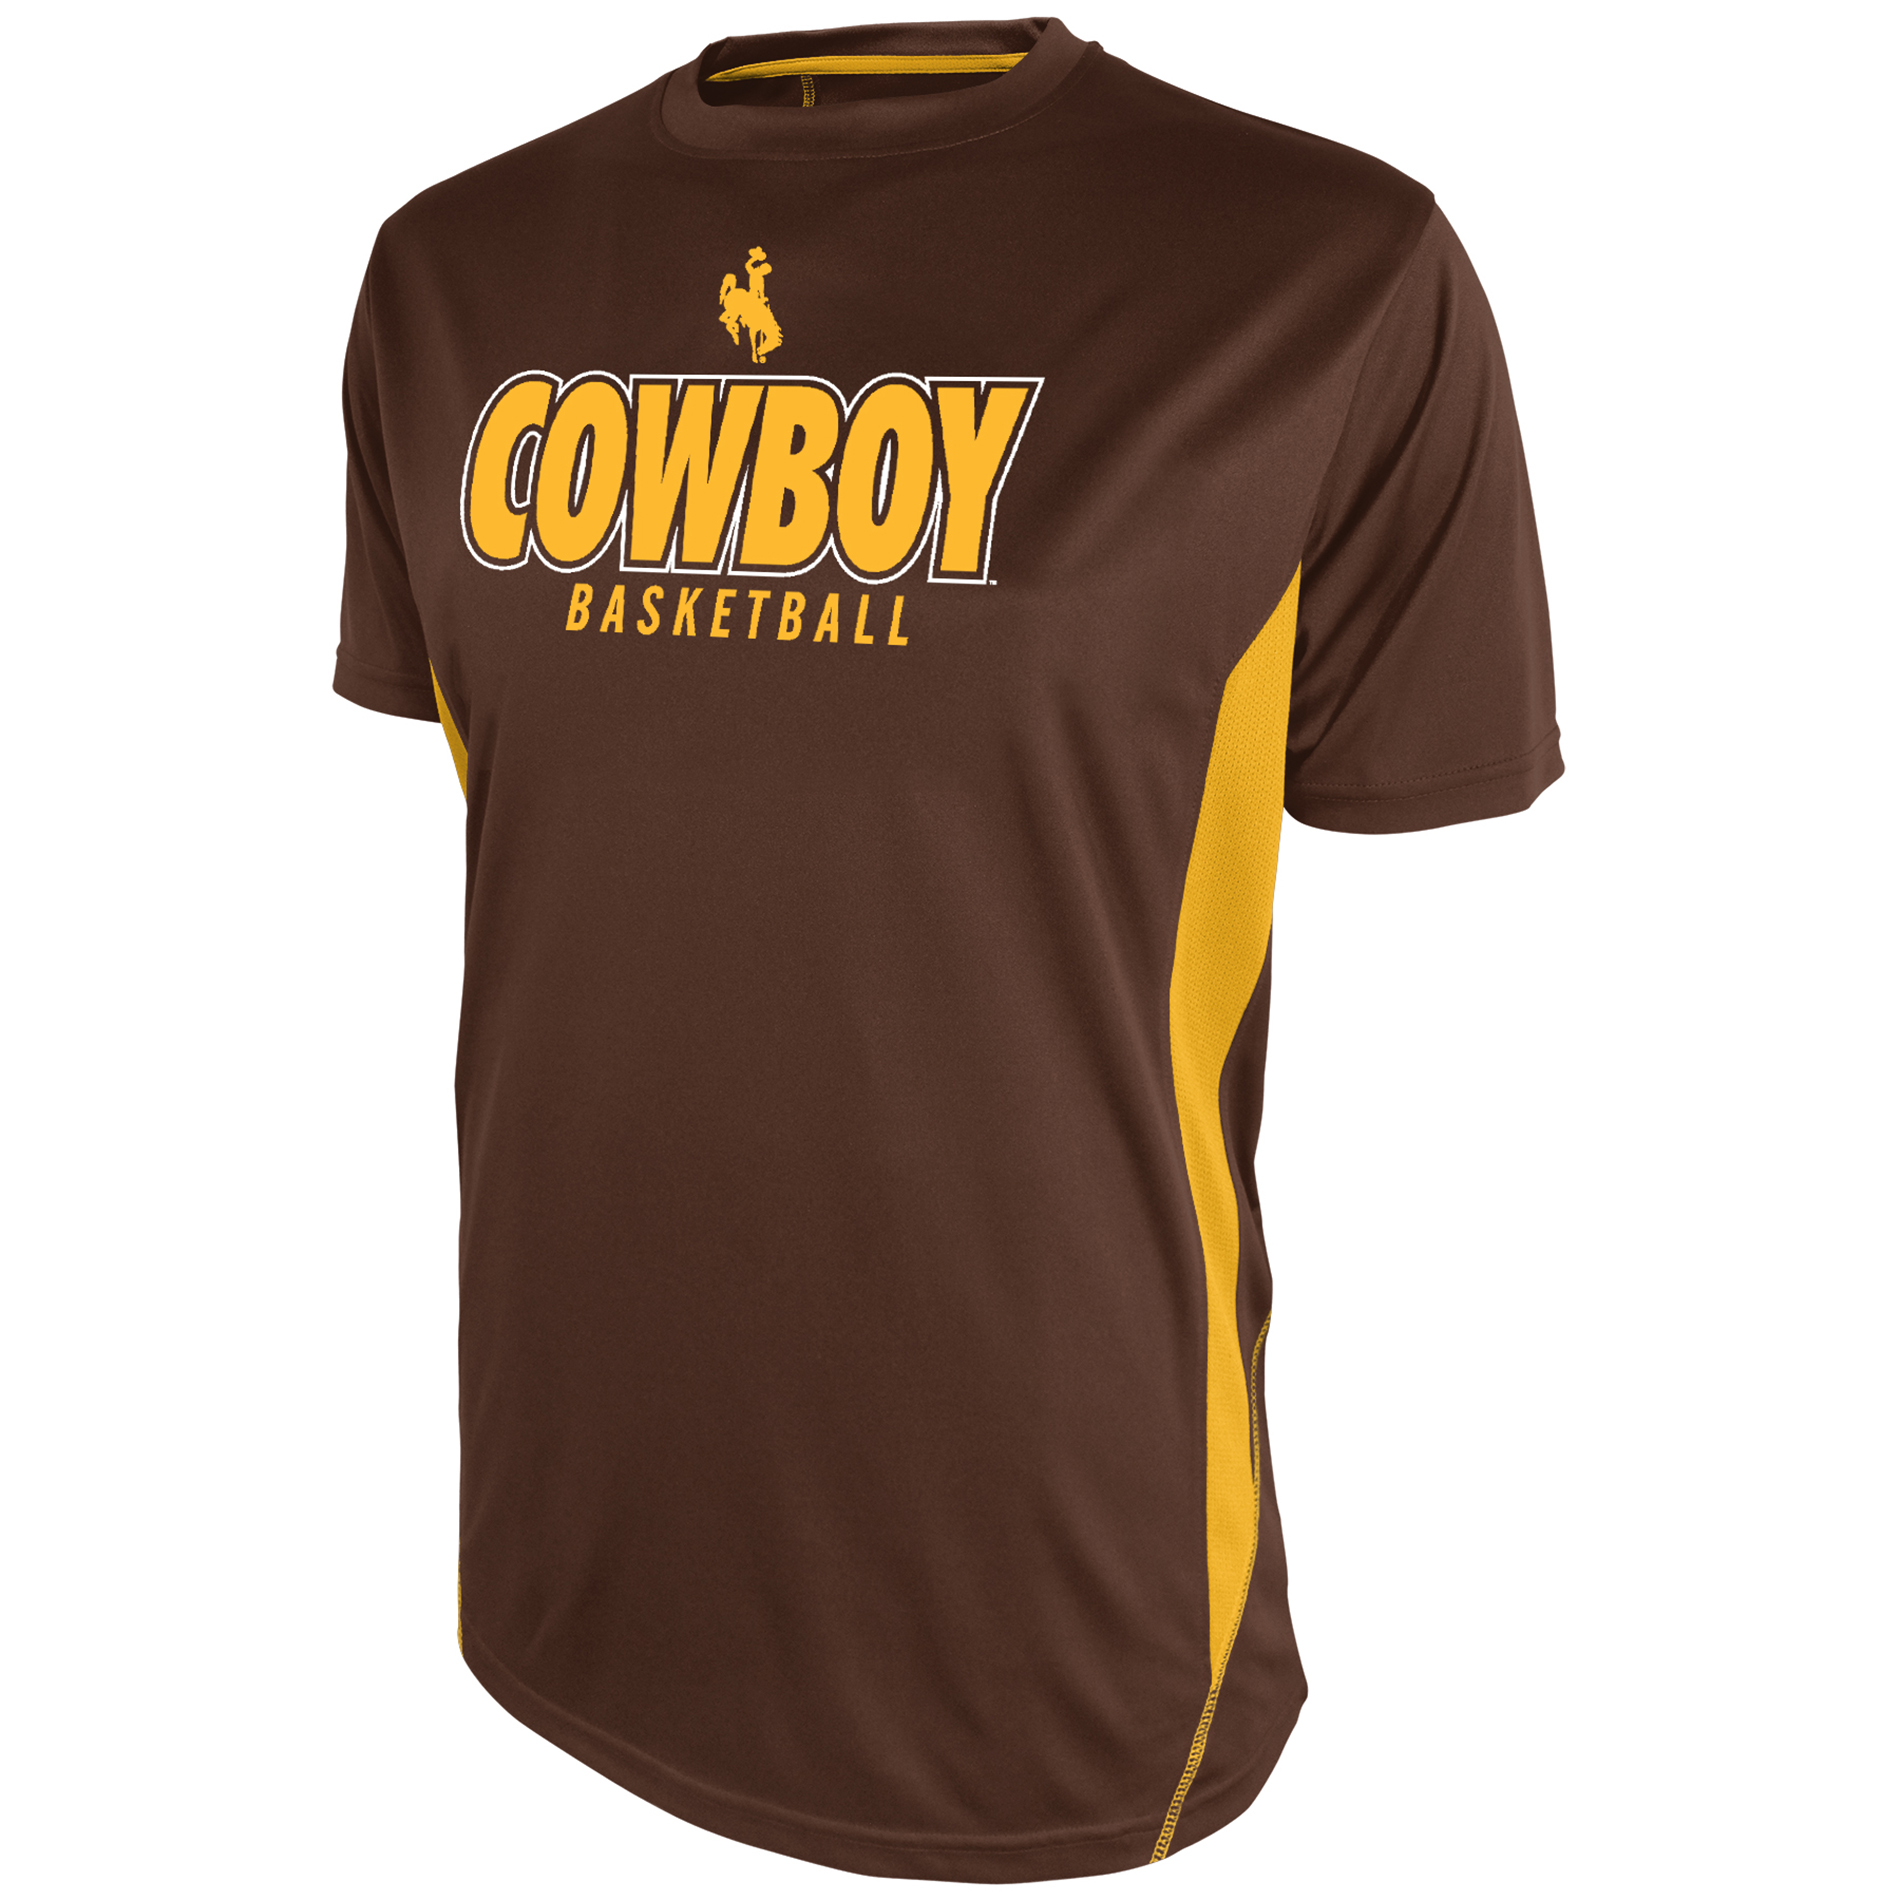 NCAA Mens' Wyoming Cowboys Short Sleeve Athletic Tee